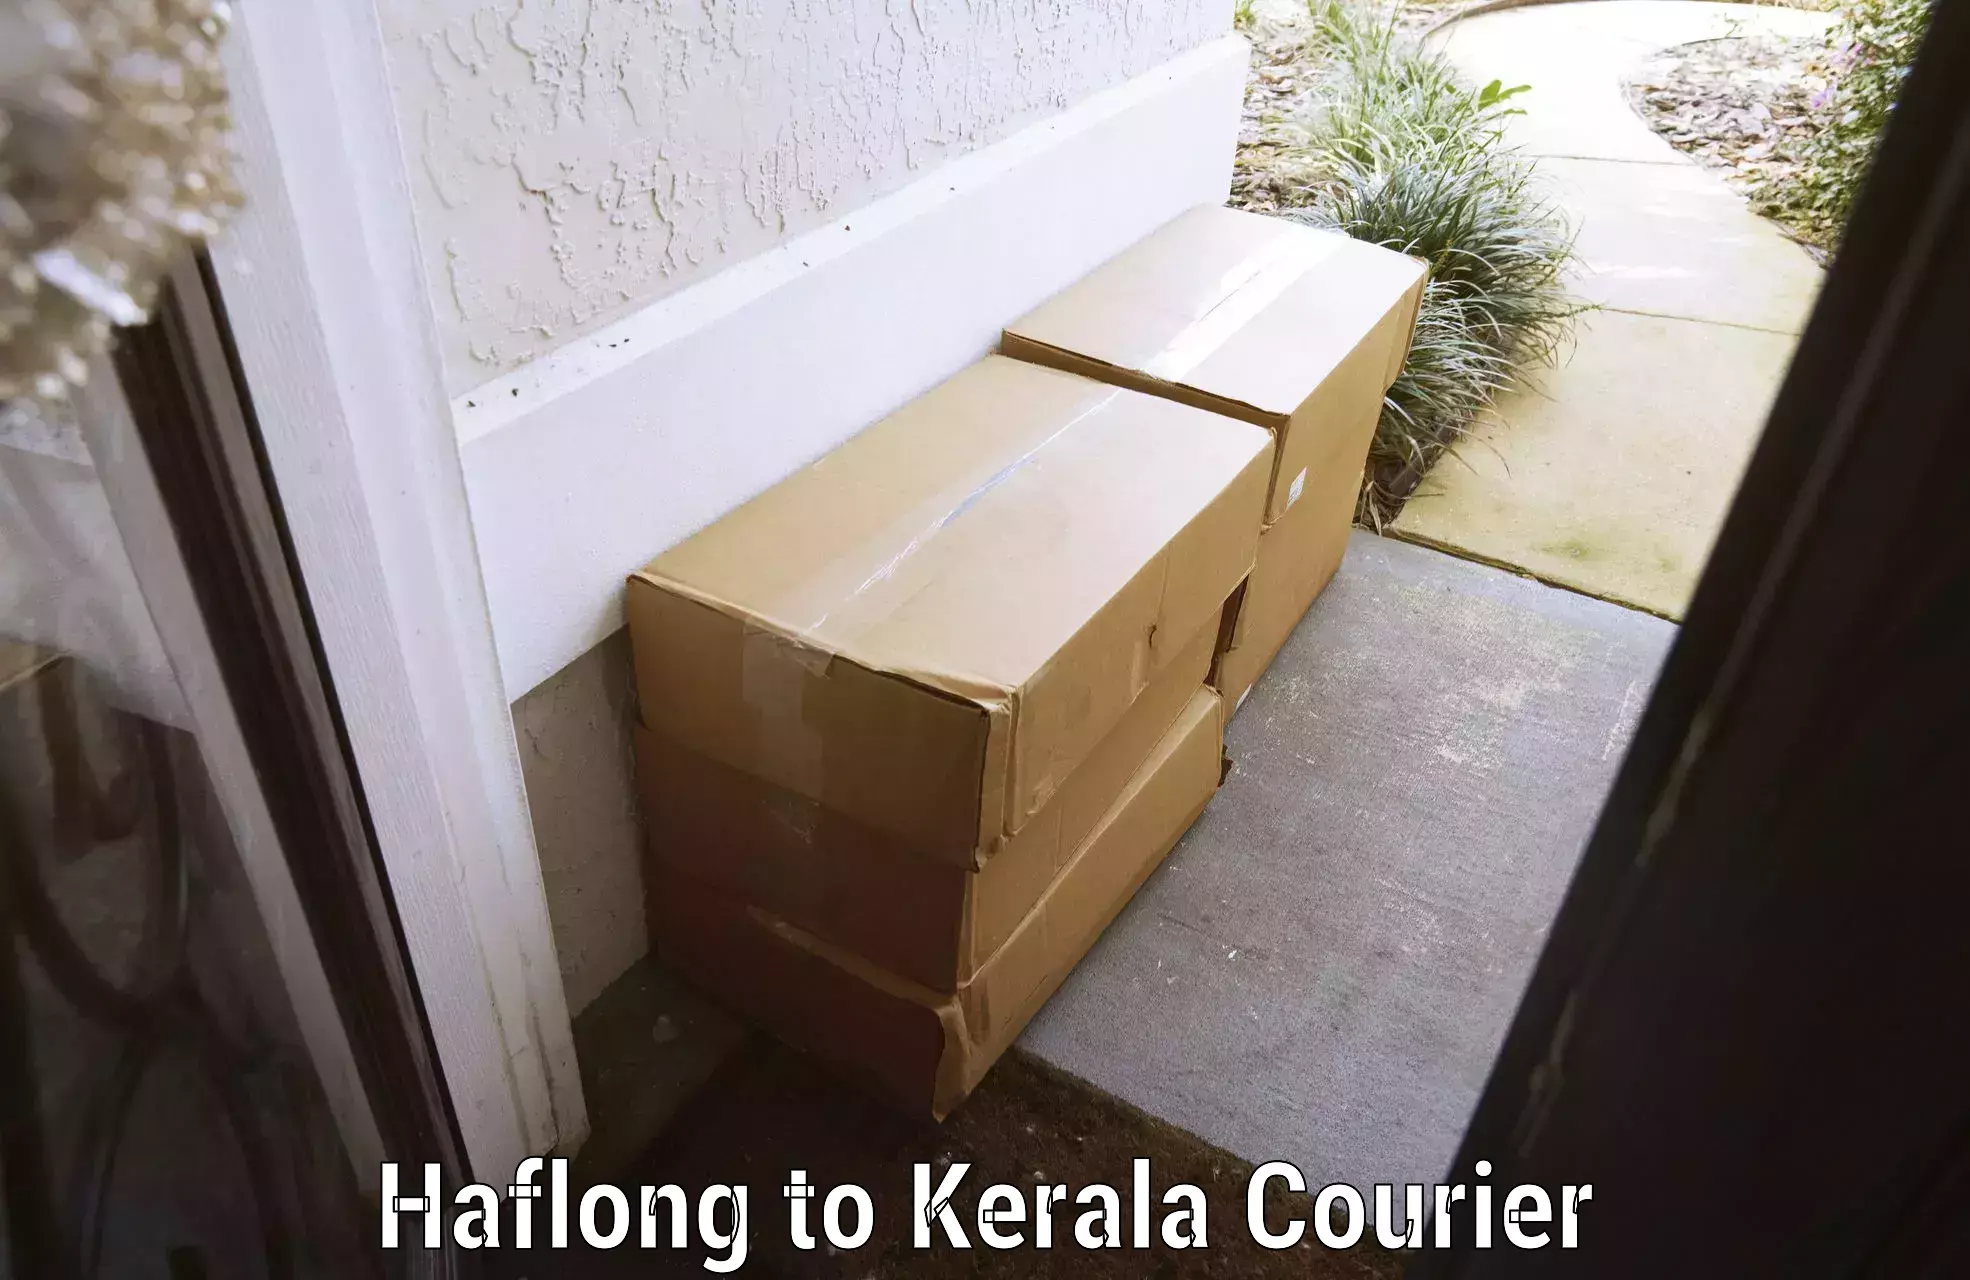 Emergency baggage service Haflong to Kerala